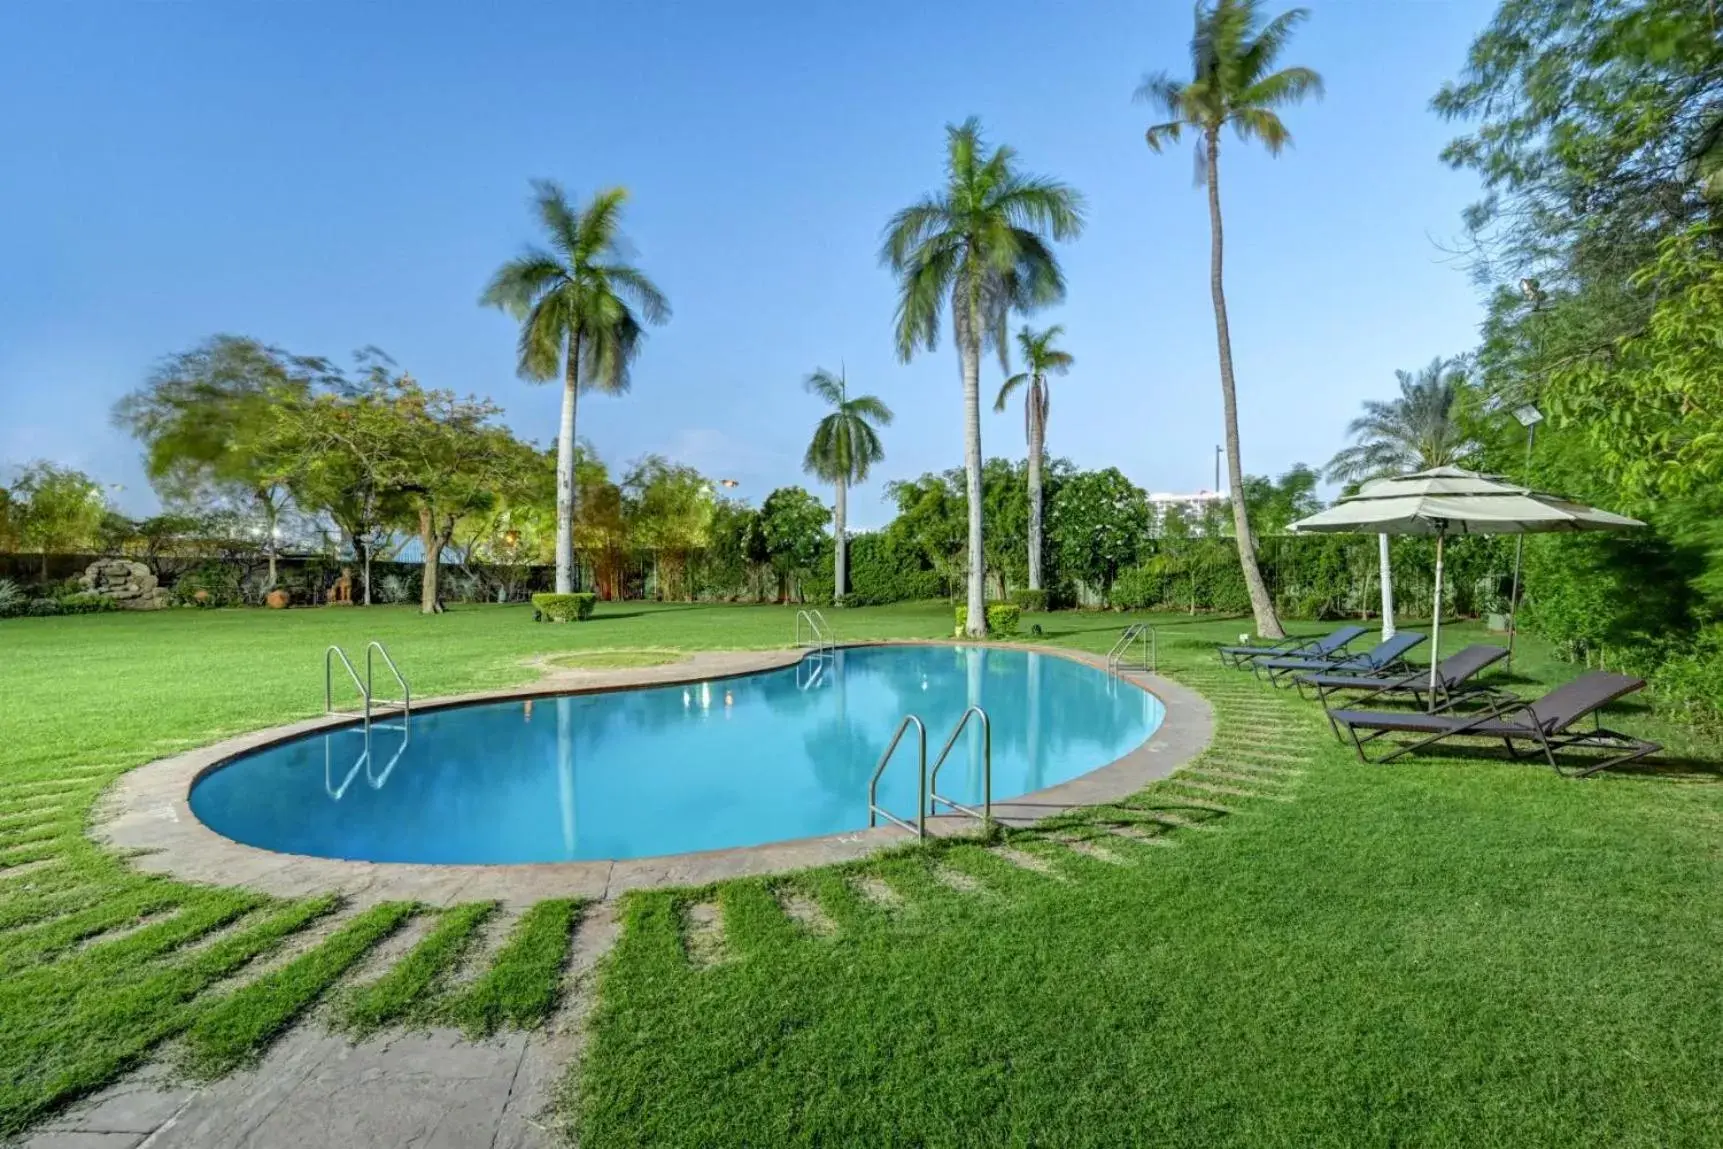 Garden, Swimming Pool in The Cama - A Sabarmati Riverfront Hotel